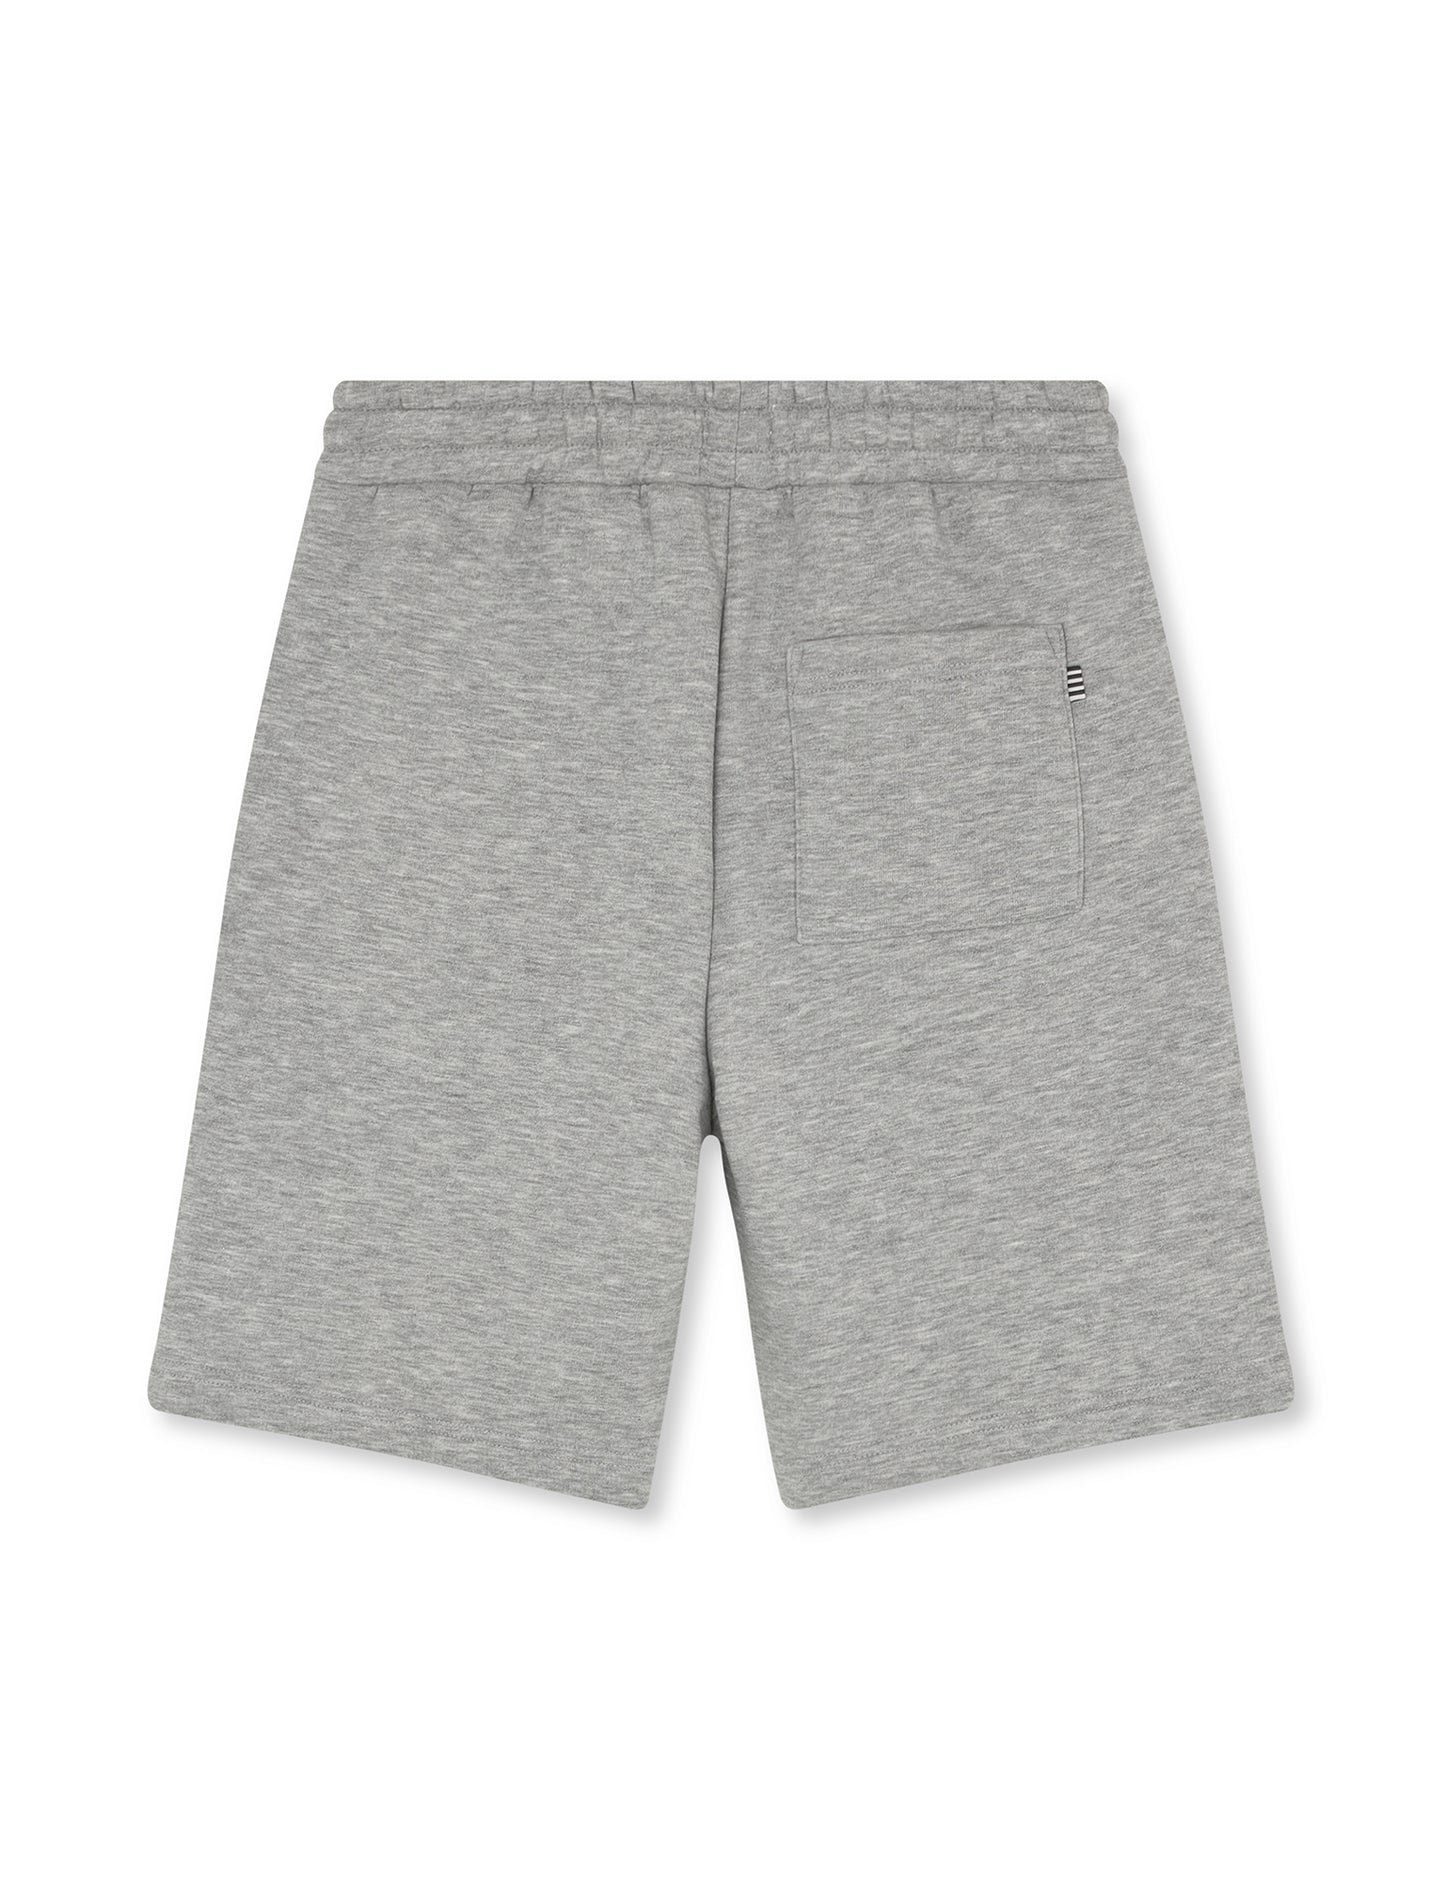 Standard Pello Shorts, Grey Melange